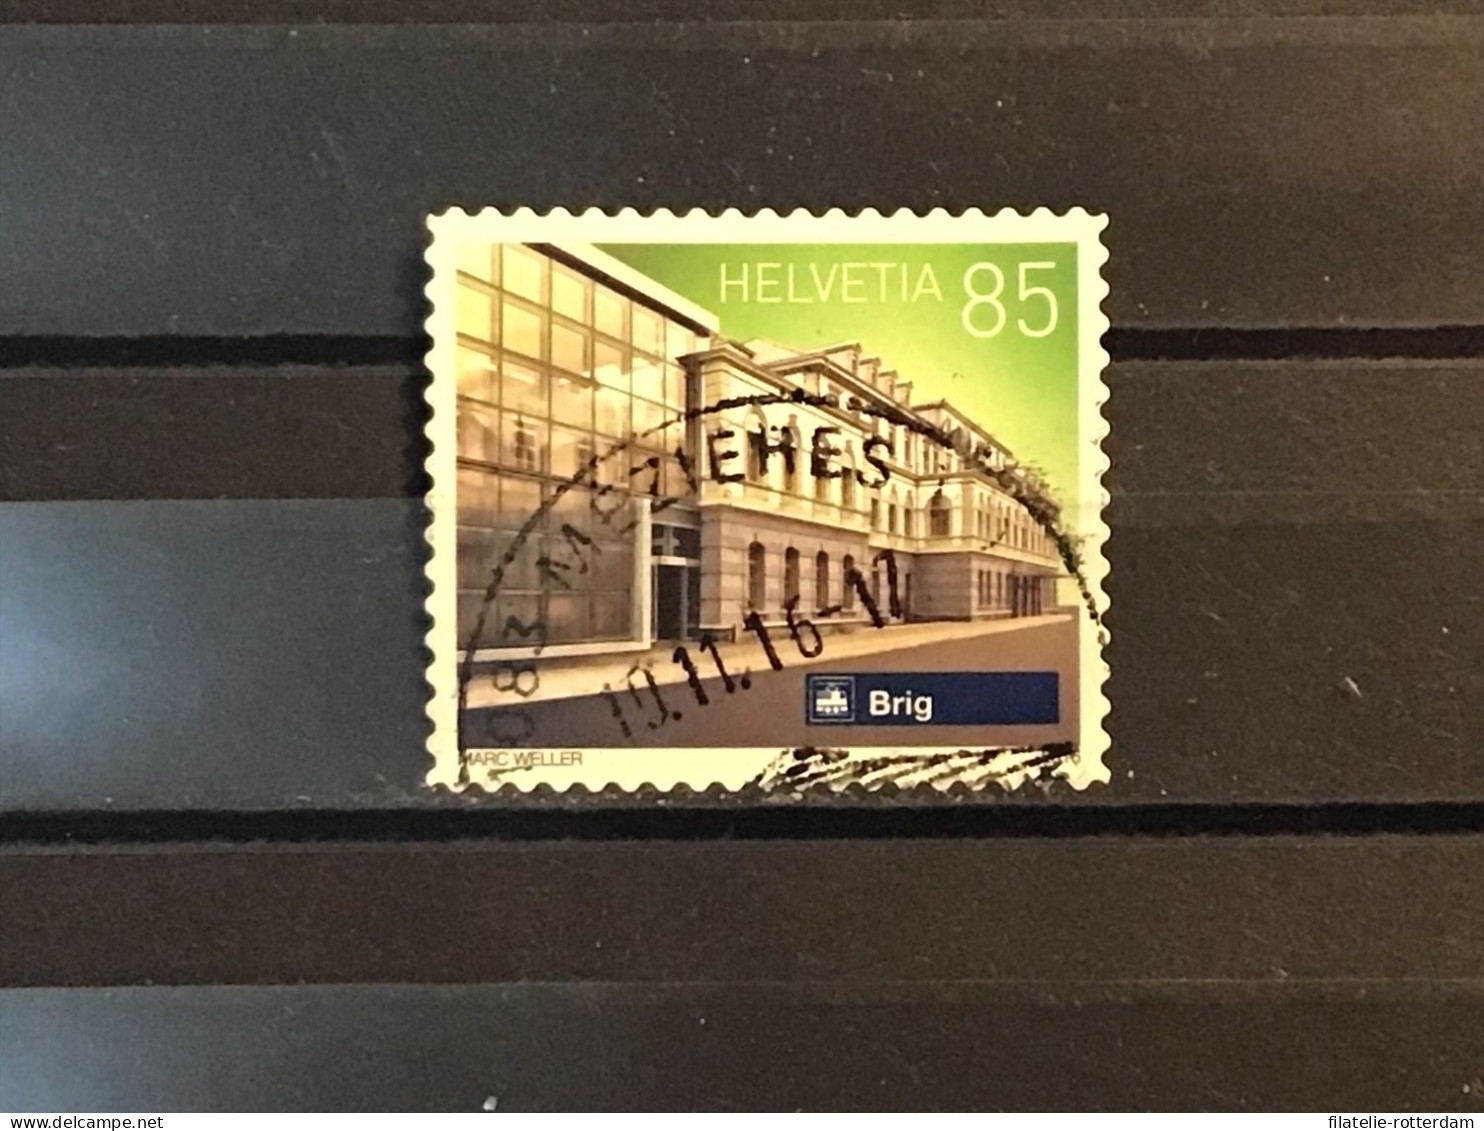 Switzerland / Zwitserland - Train Stations (85) 2016 - Used Stamps